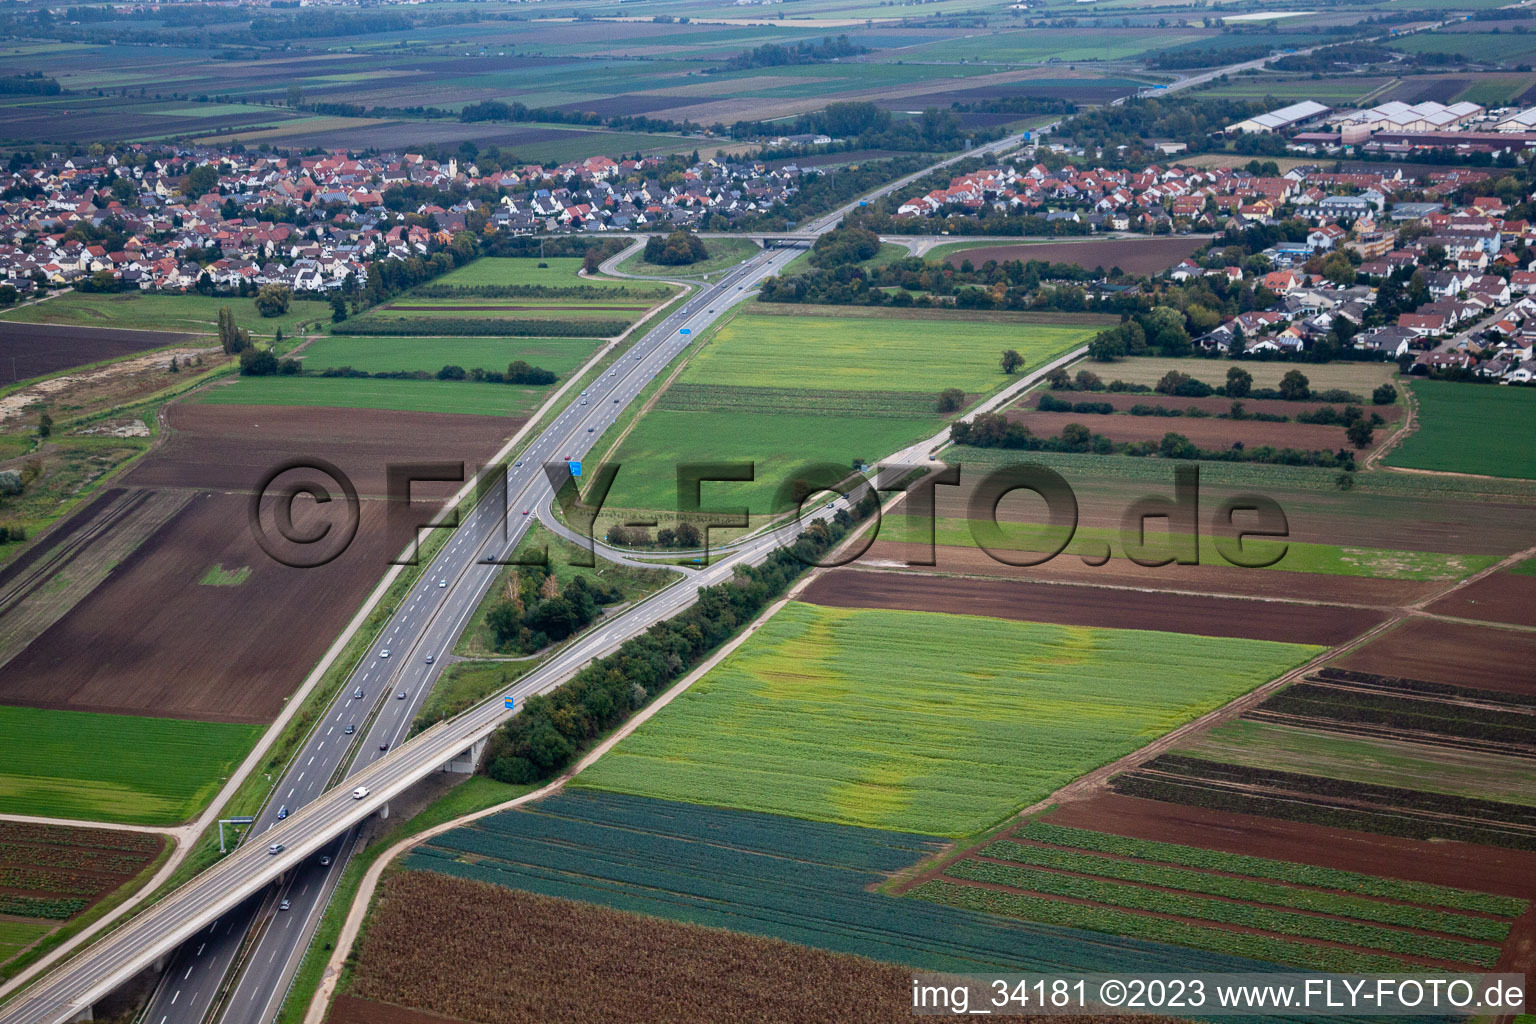 Drone recording of Hochdorf-Assenheim in the state Rhineland-Palatinate, Germany